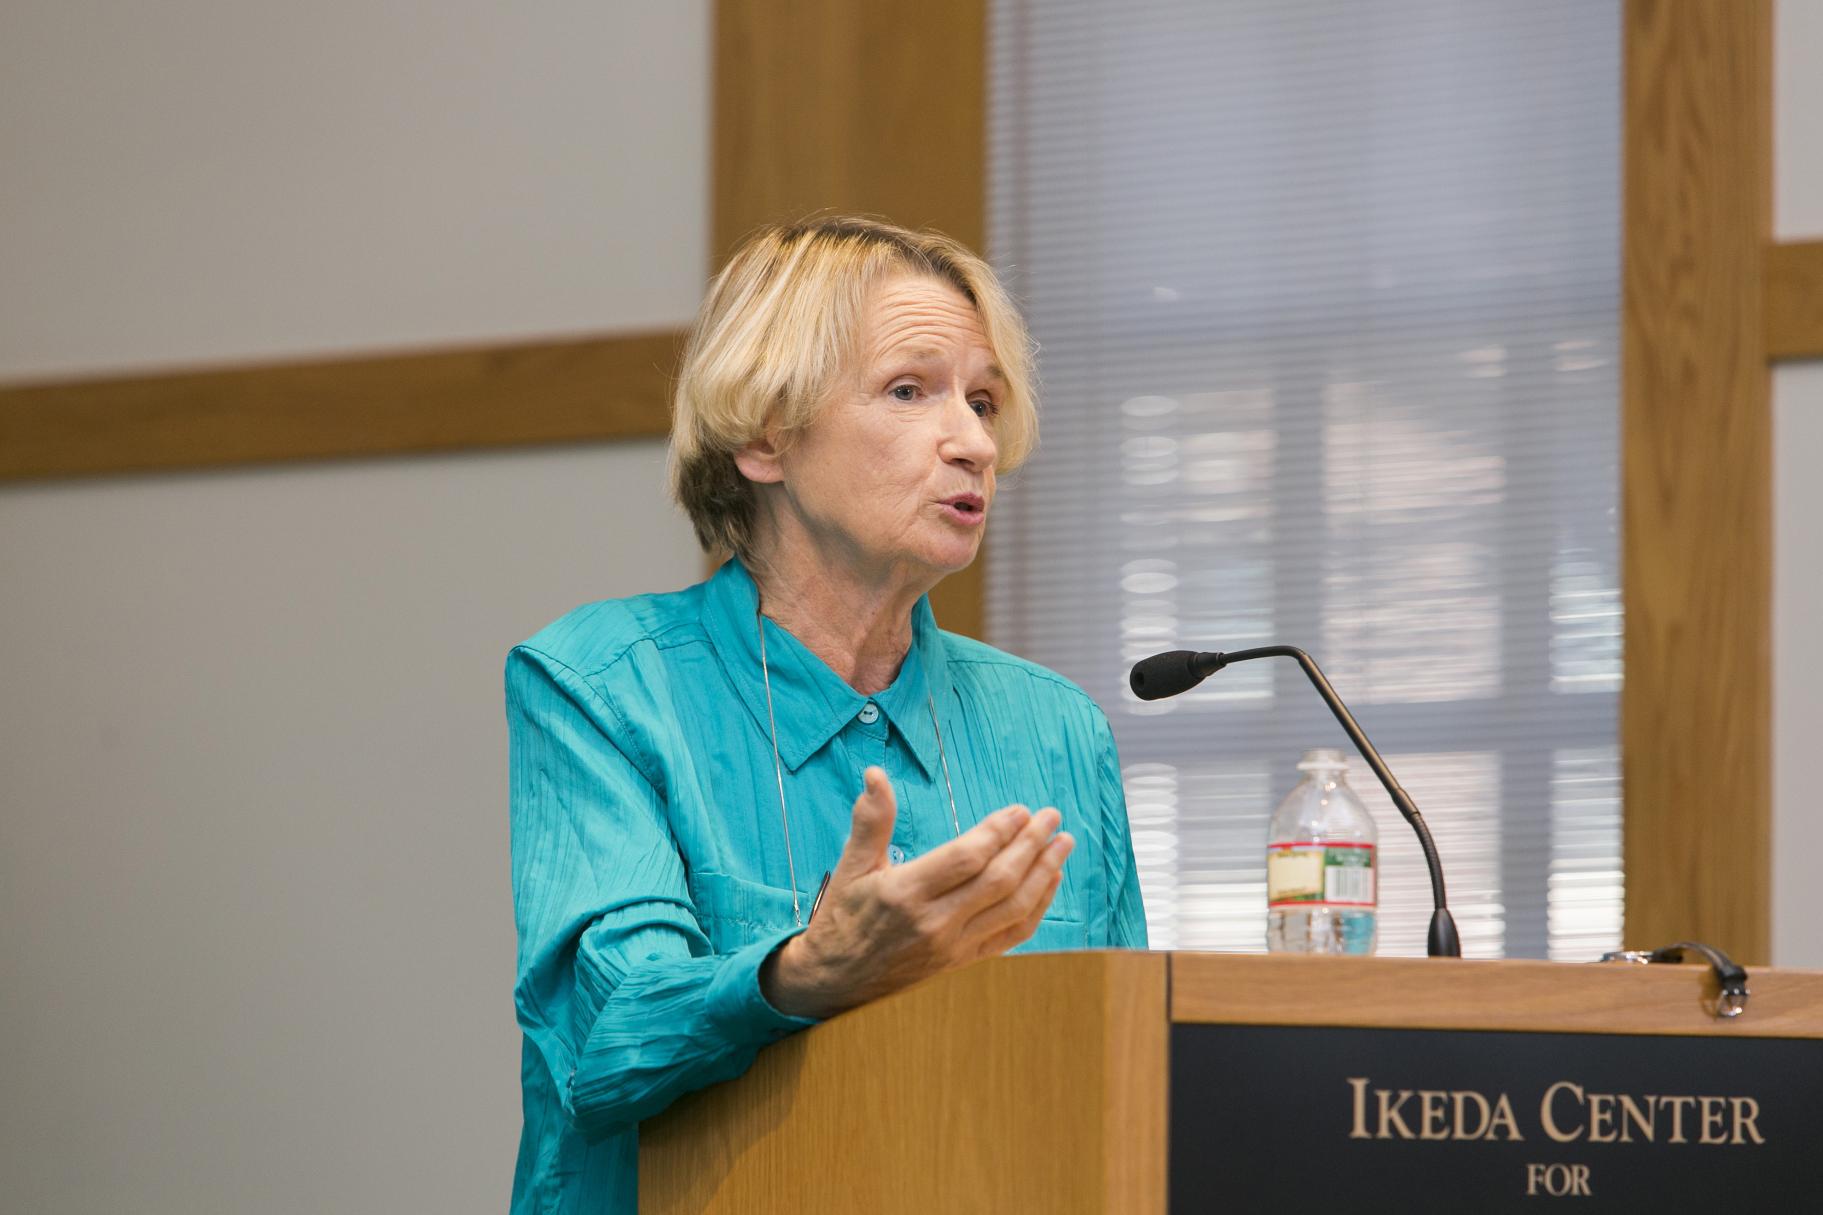 2014 Ikeda Forum speaker Mari Fitzduff speaking at the podium